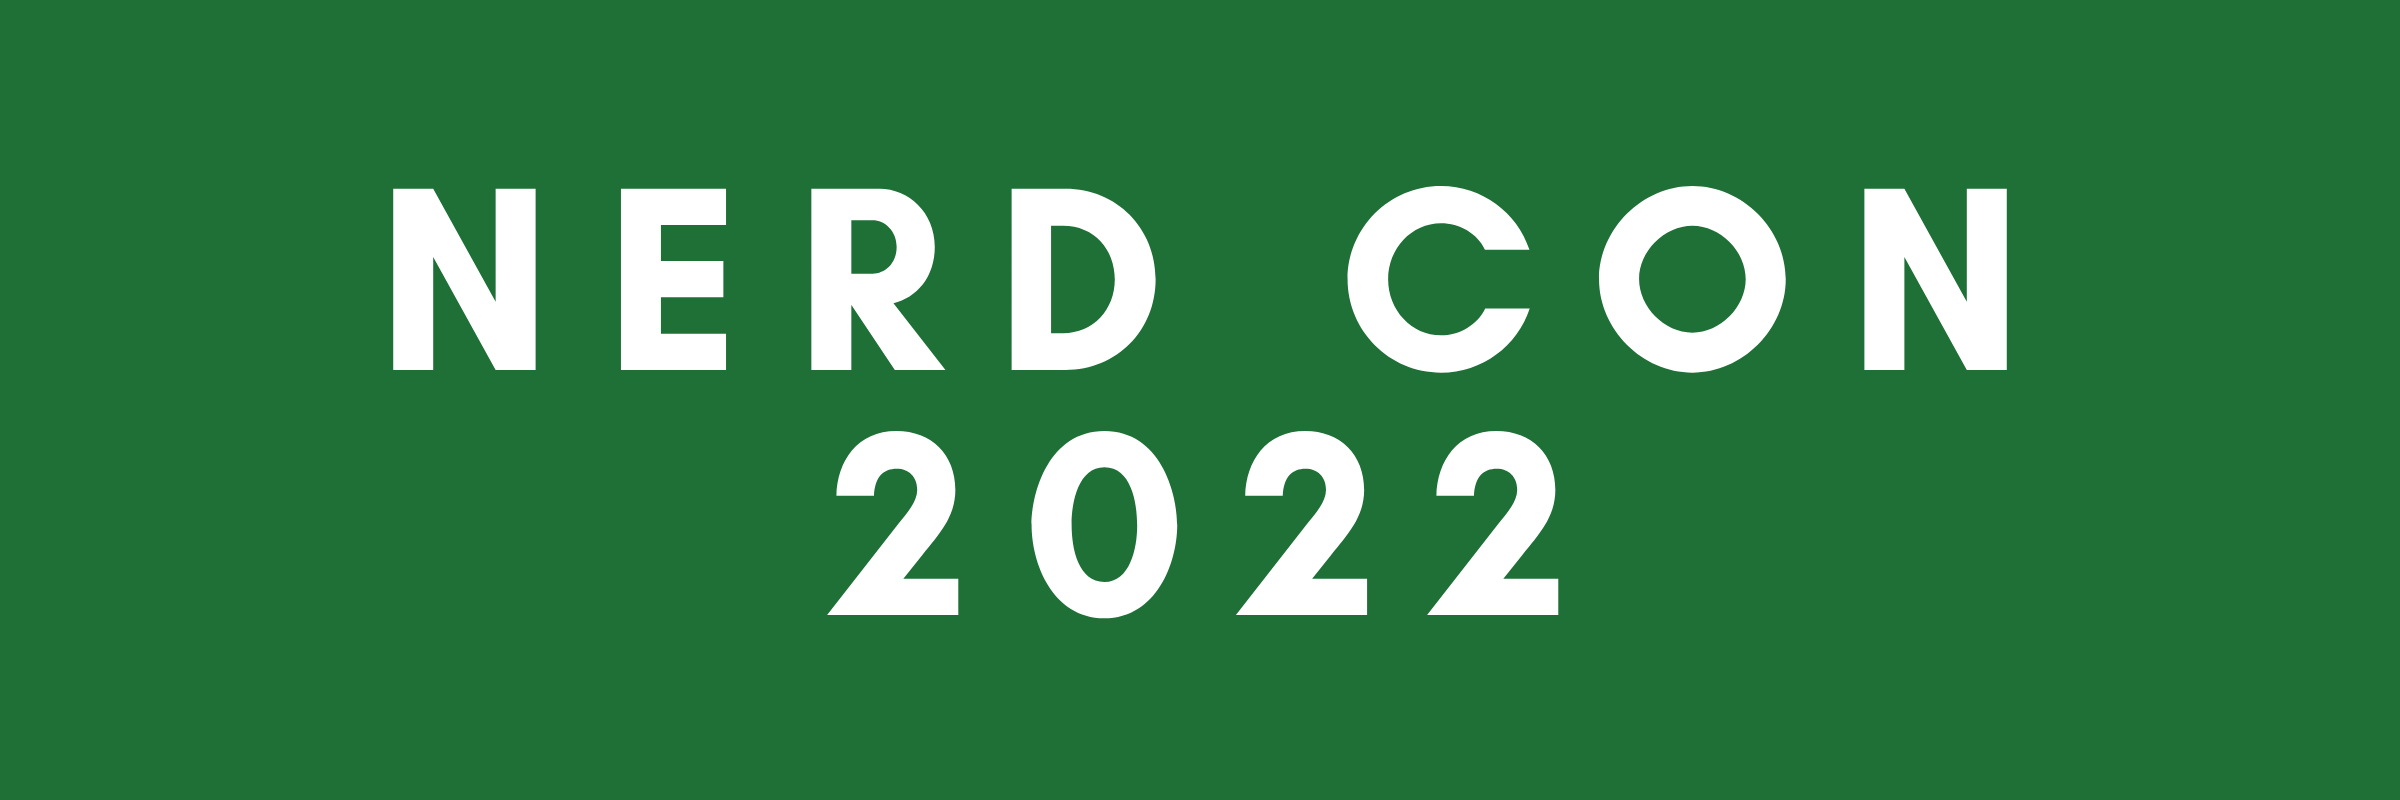 Nerd Con 2022